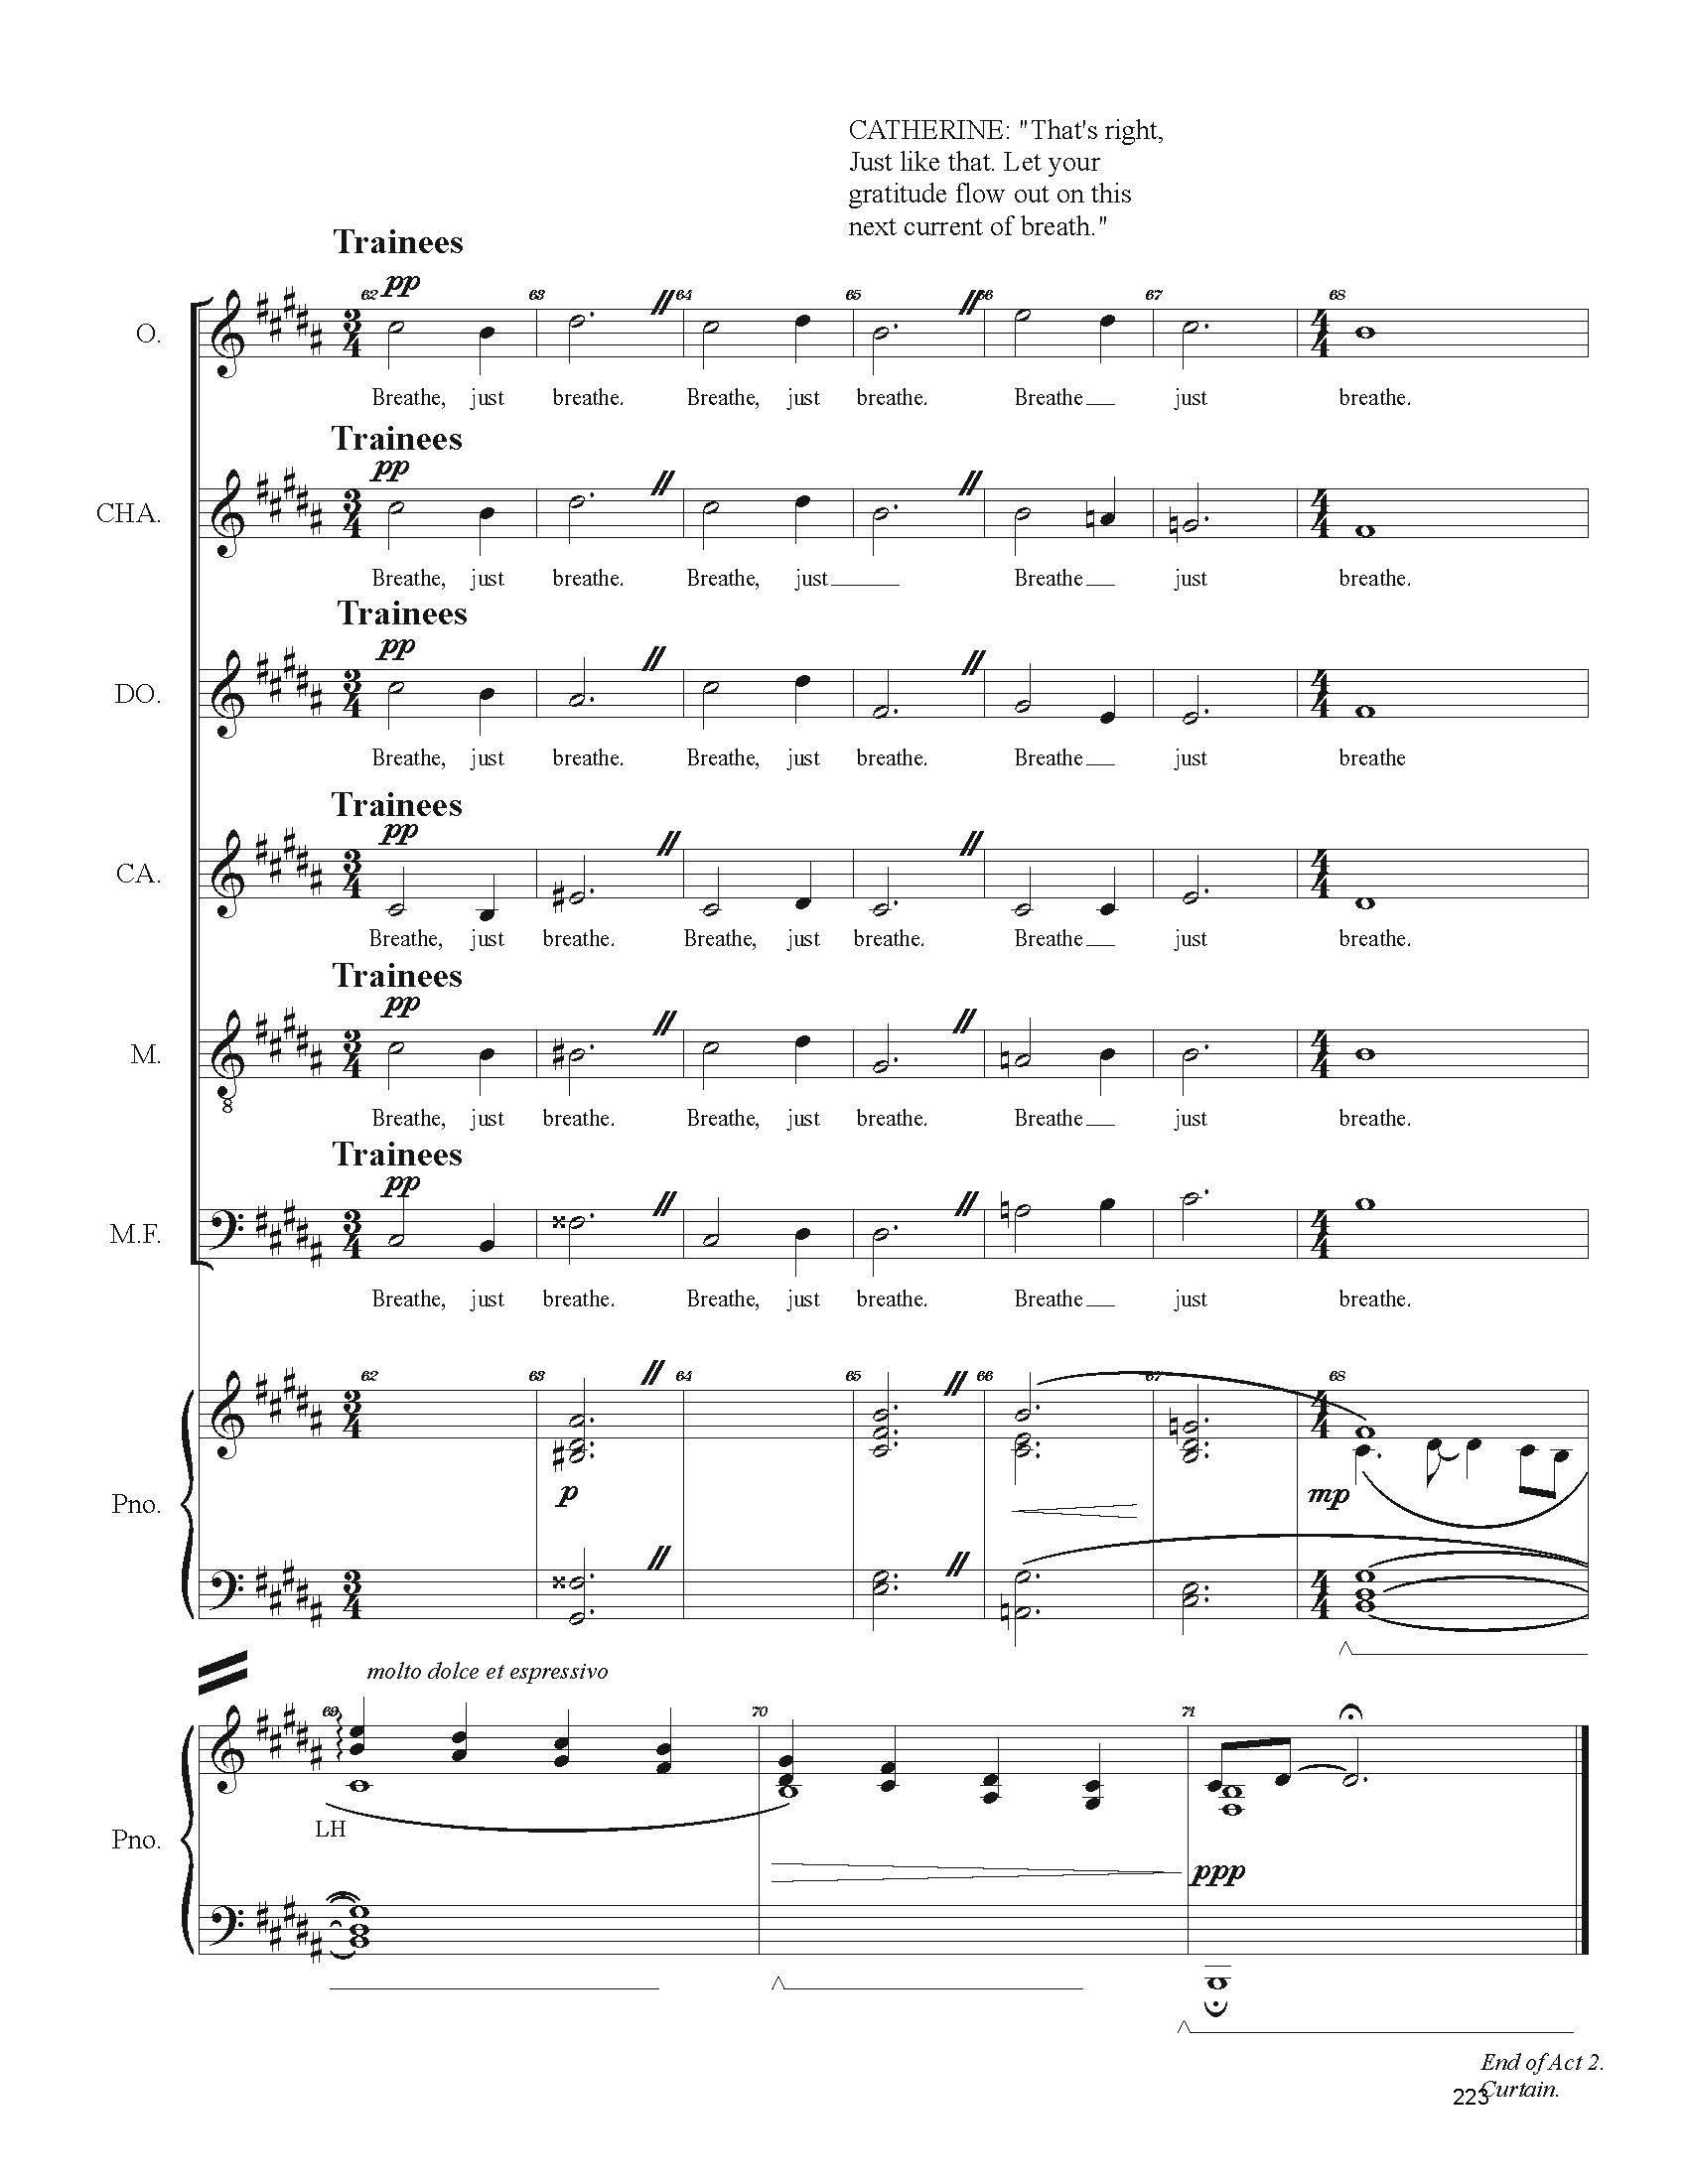 FULL PIANO VOCAL SCORE DRAFT 1 - Score_Page_223.jpg